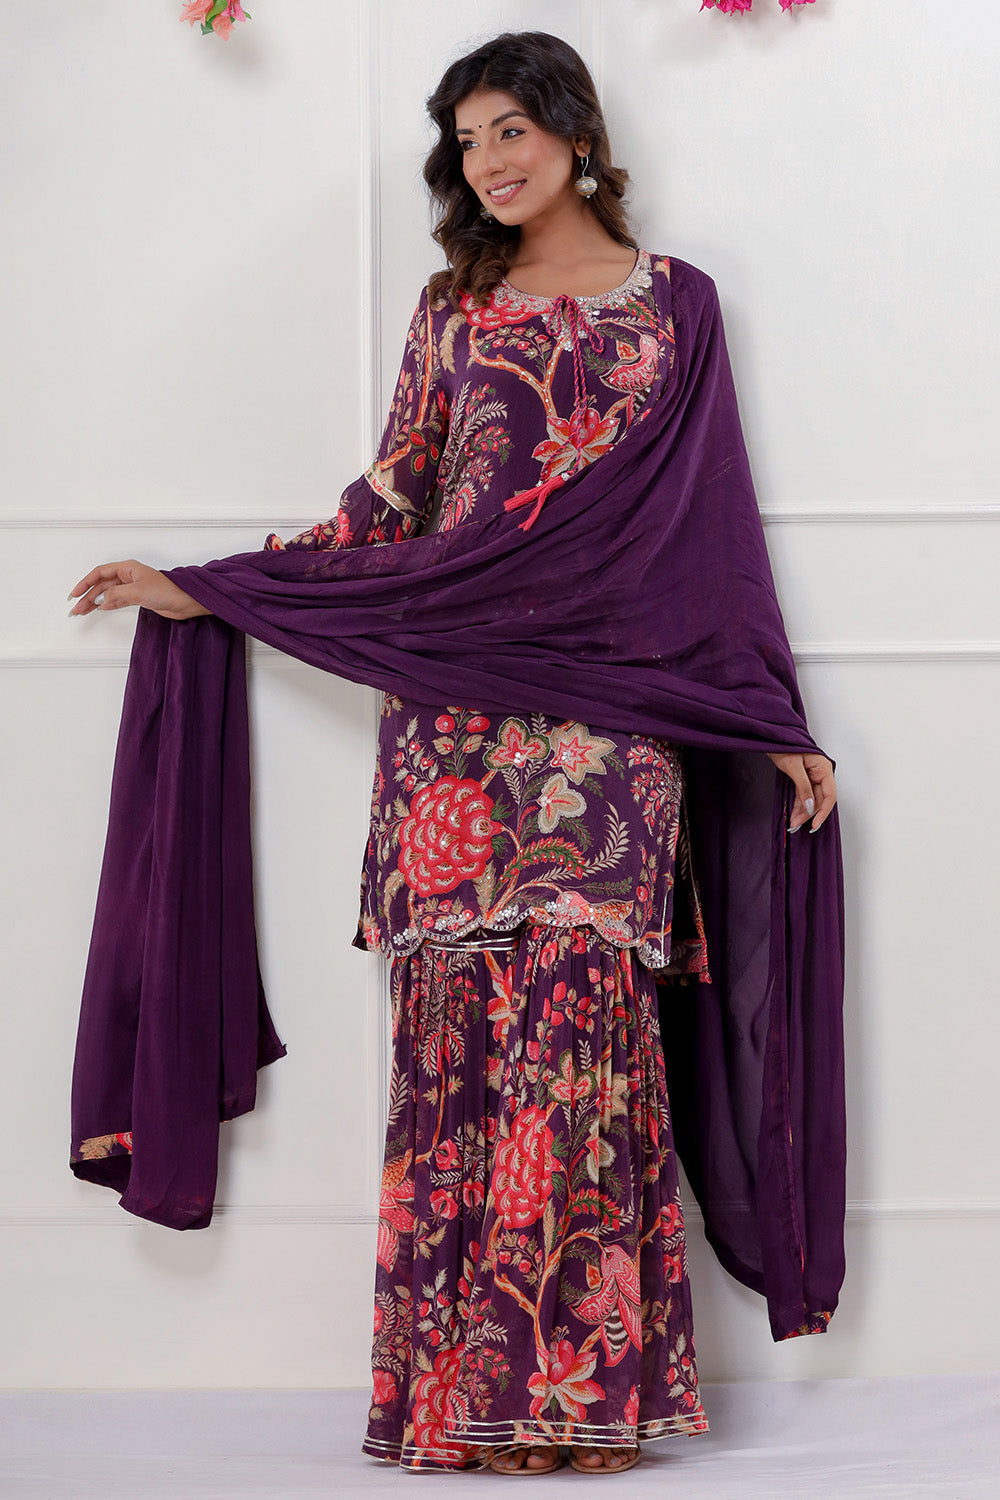 Purple Color Crepe Printed Gharara Suit